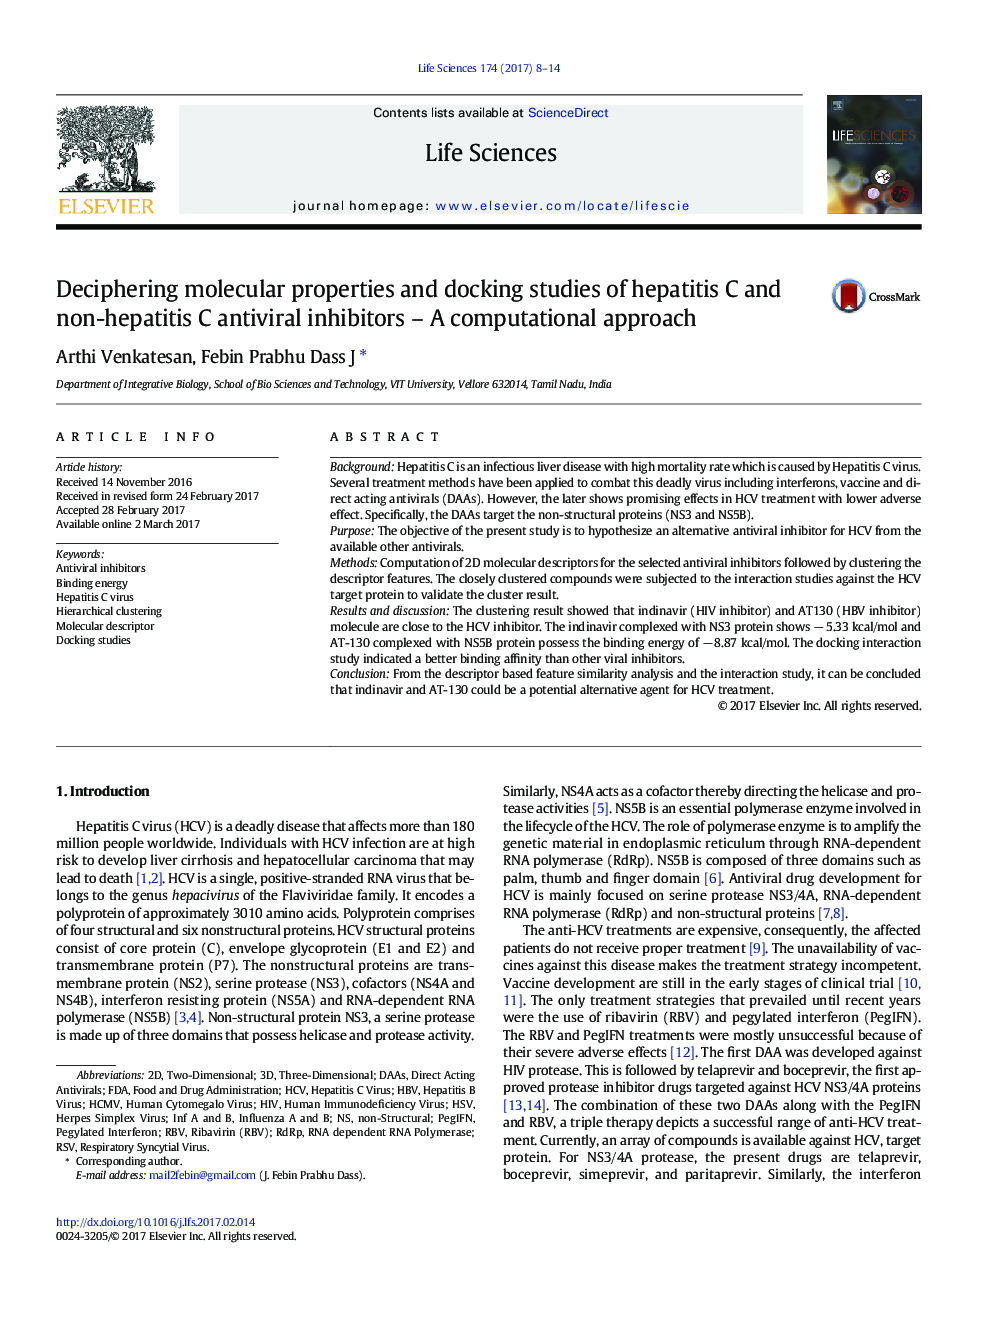 Deciphering molecular properties and docking studies of hepatitis C and non-hepatitis C antiviral inhibitors - A computational approach